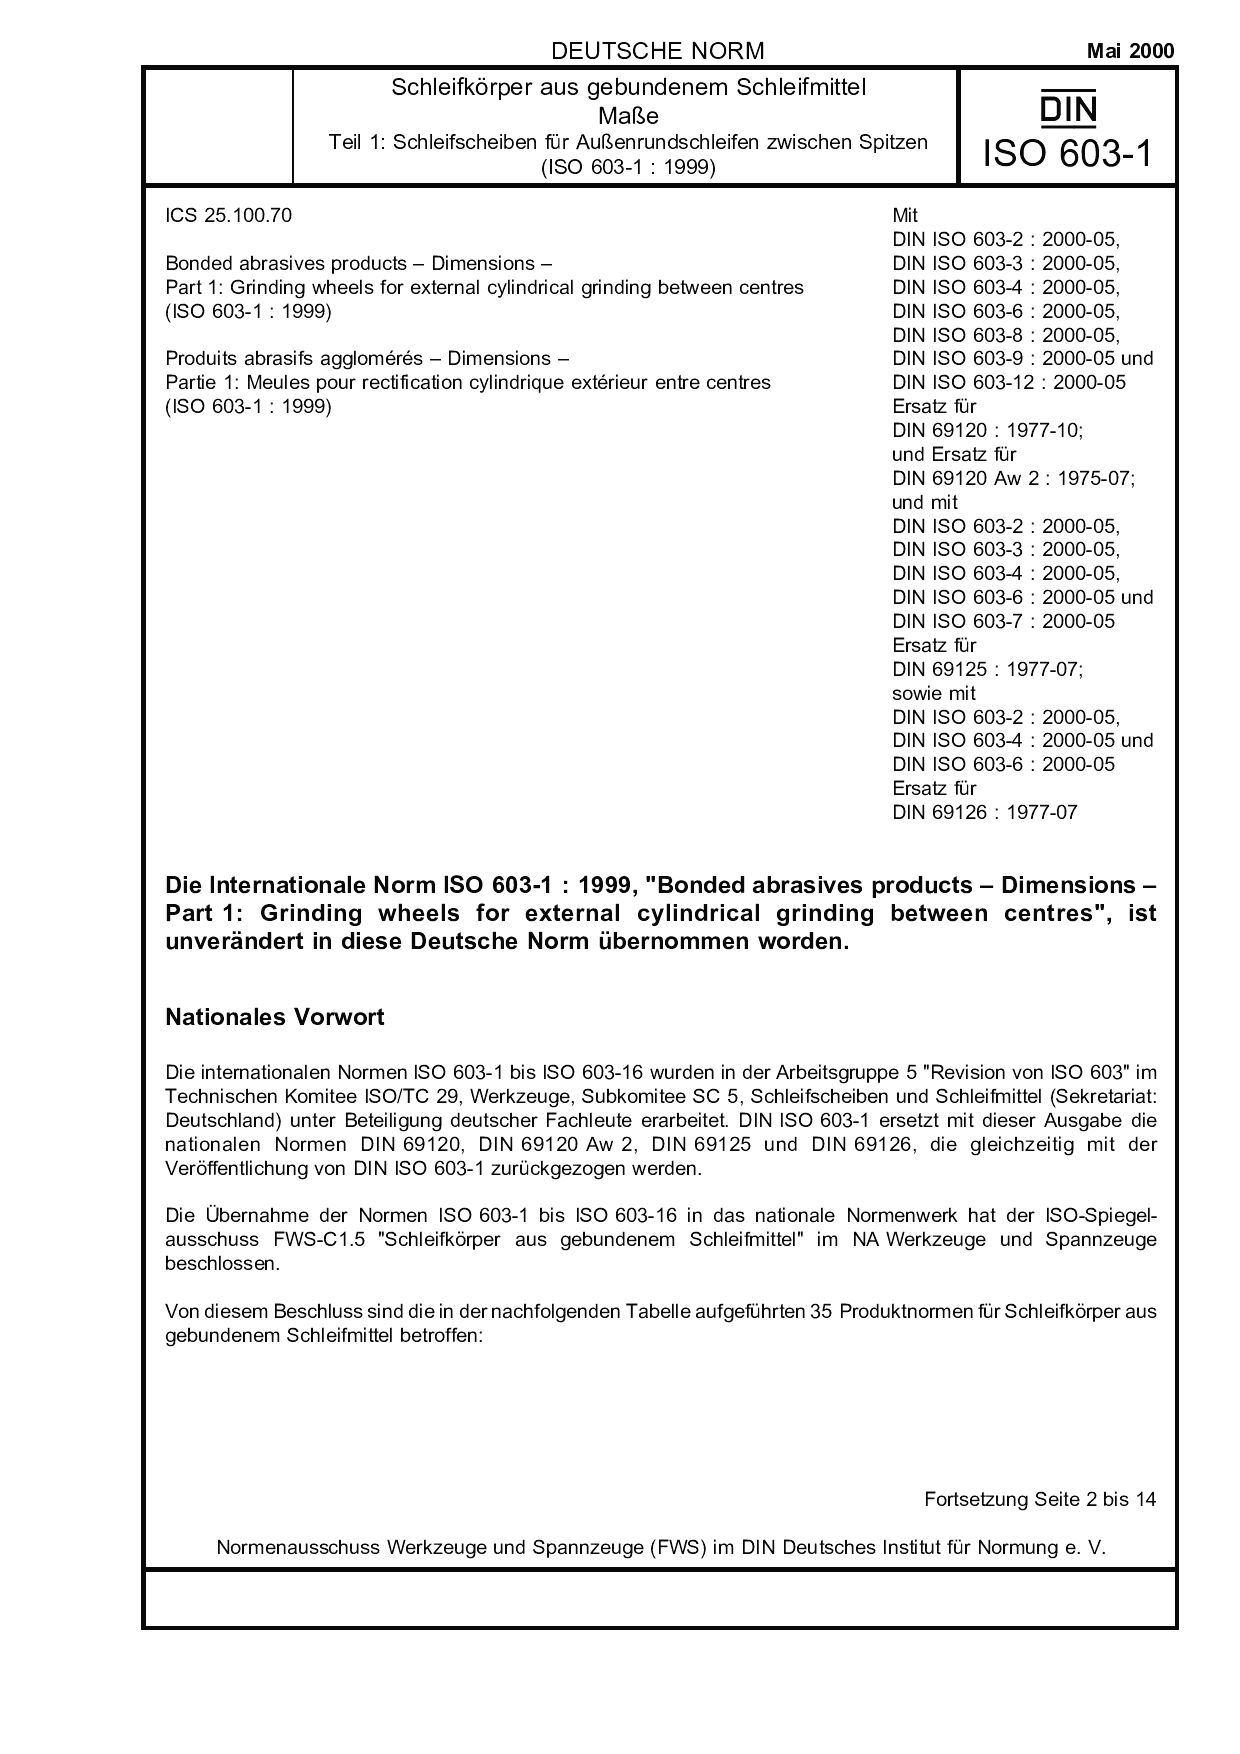 DIN ISO 603-1:2000